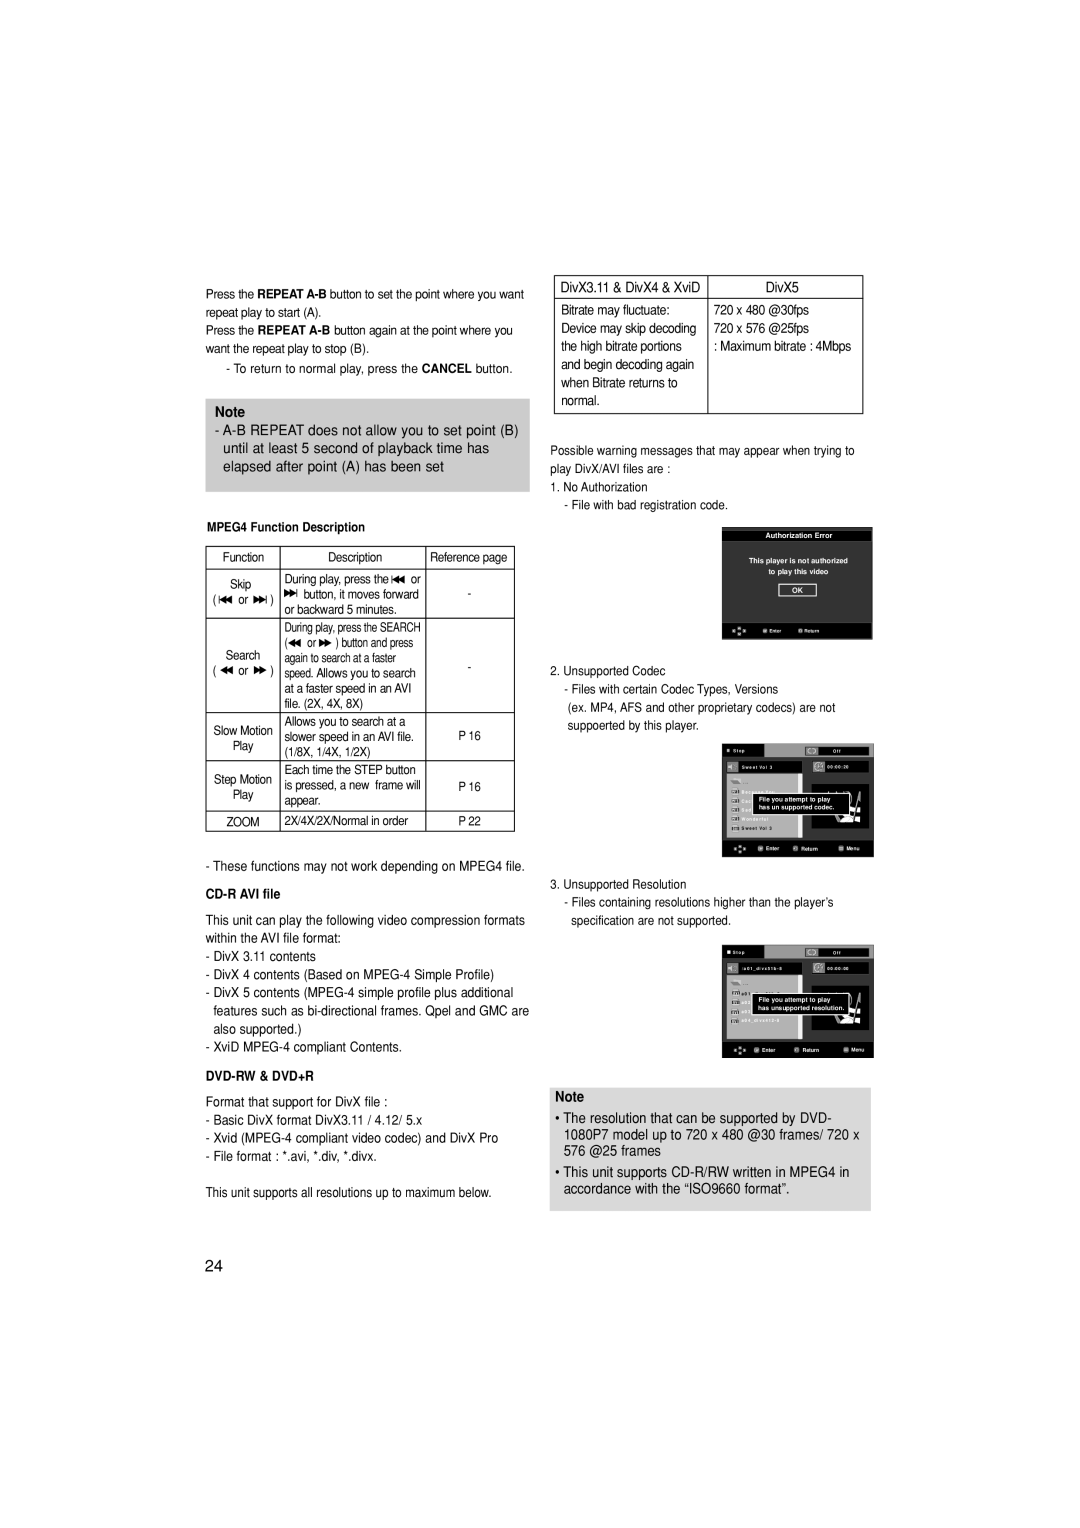 Samsung DVD-1080P7/XSA, DVD-1080P7/XSV manual MPEG4 Function Description 